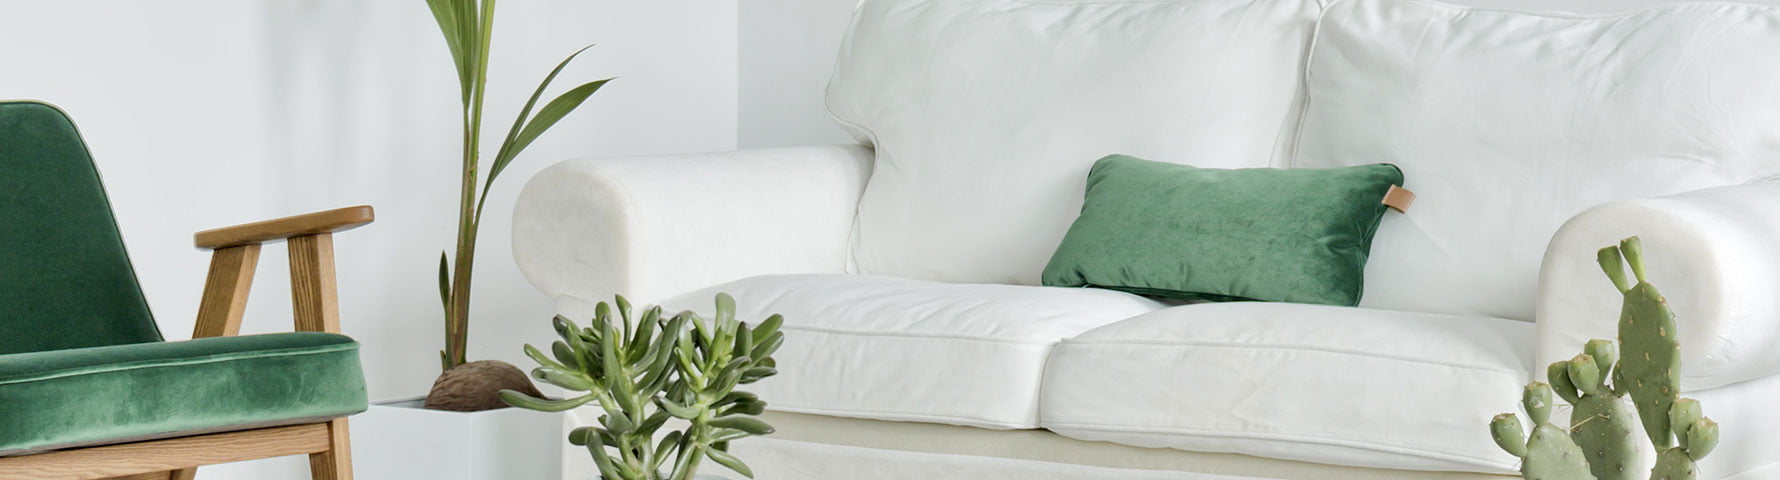 scandinavian sofa style